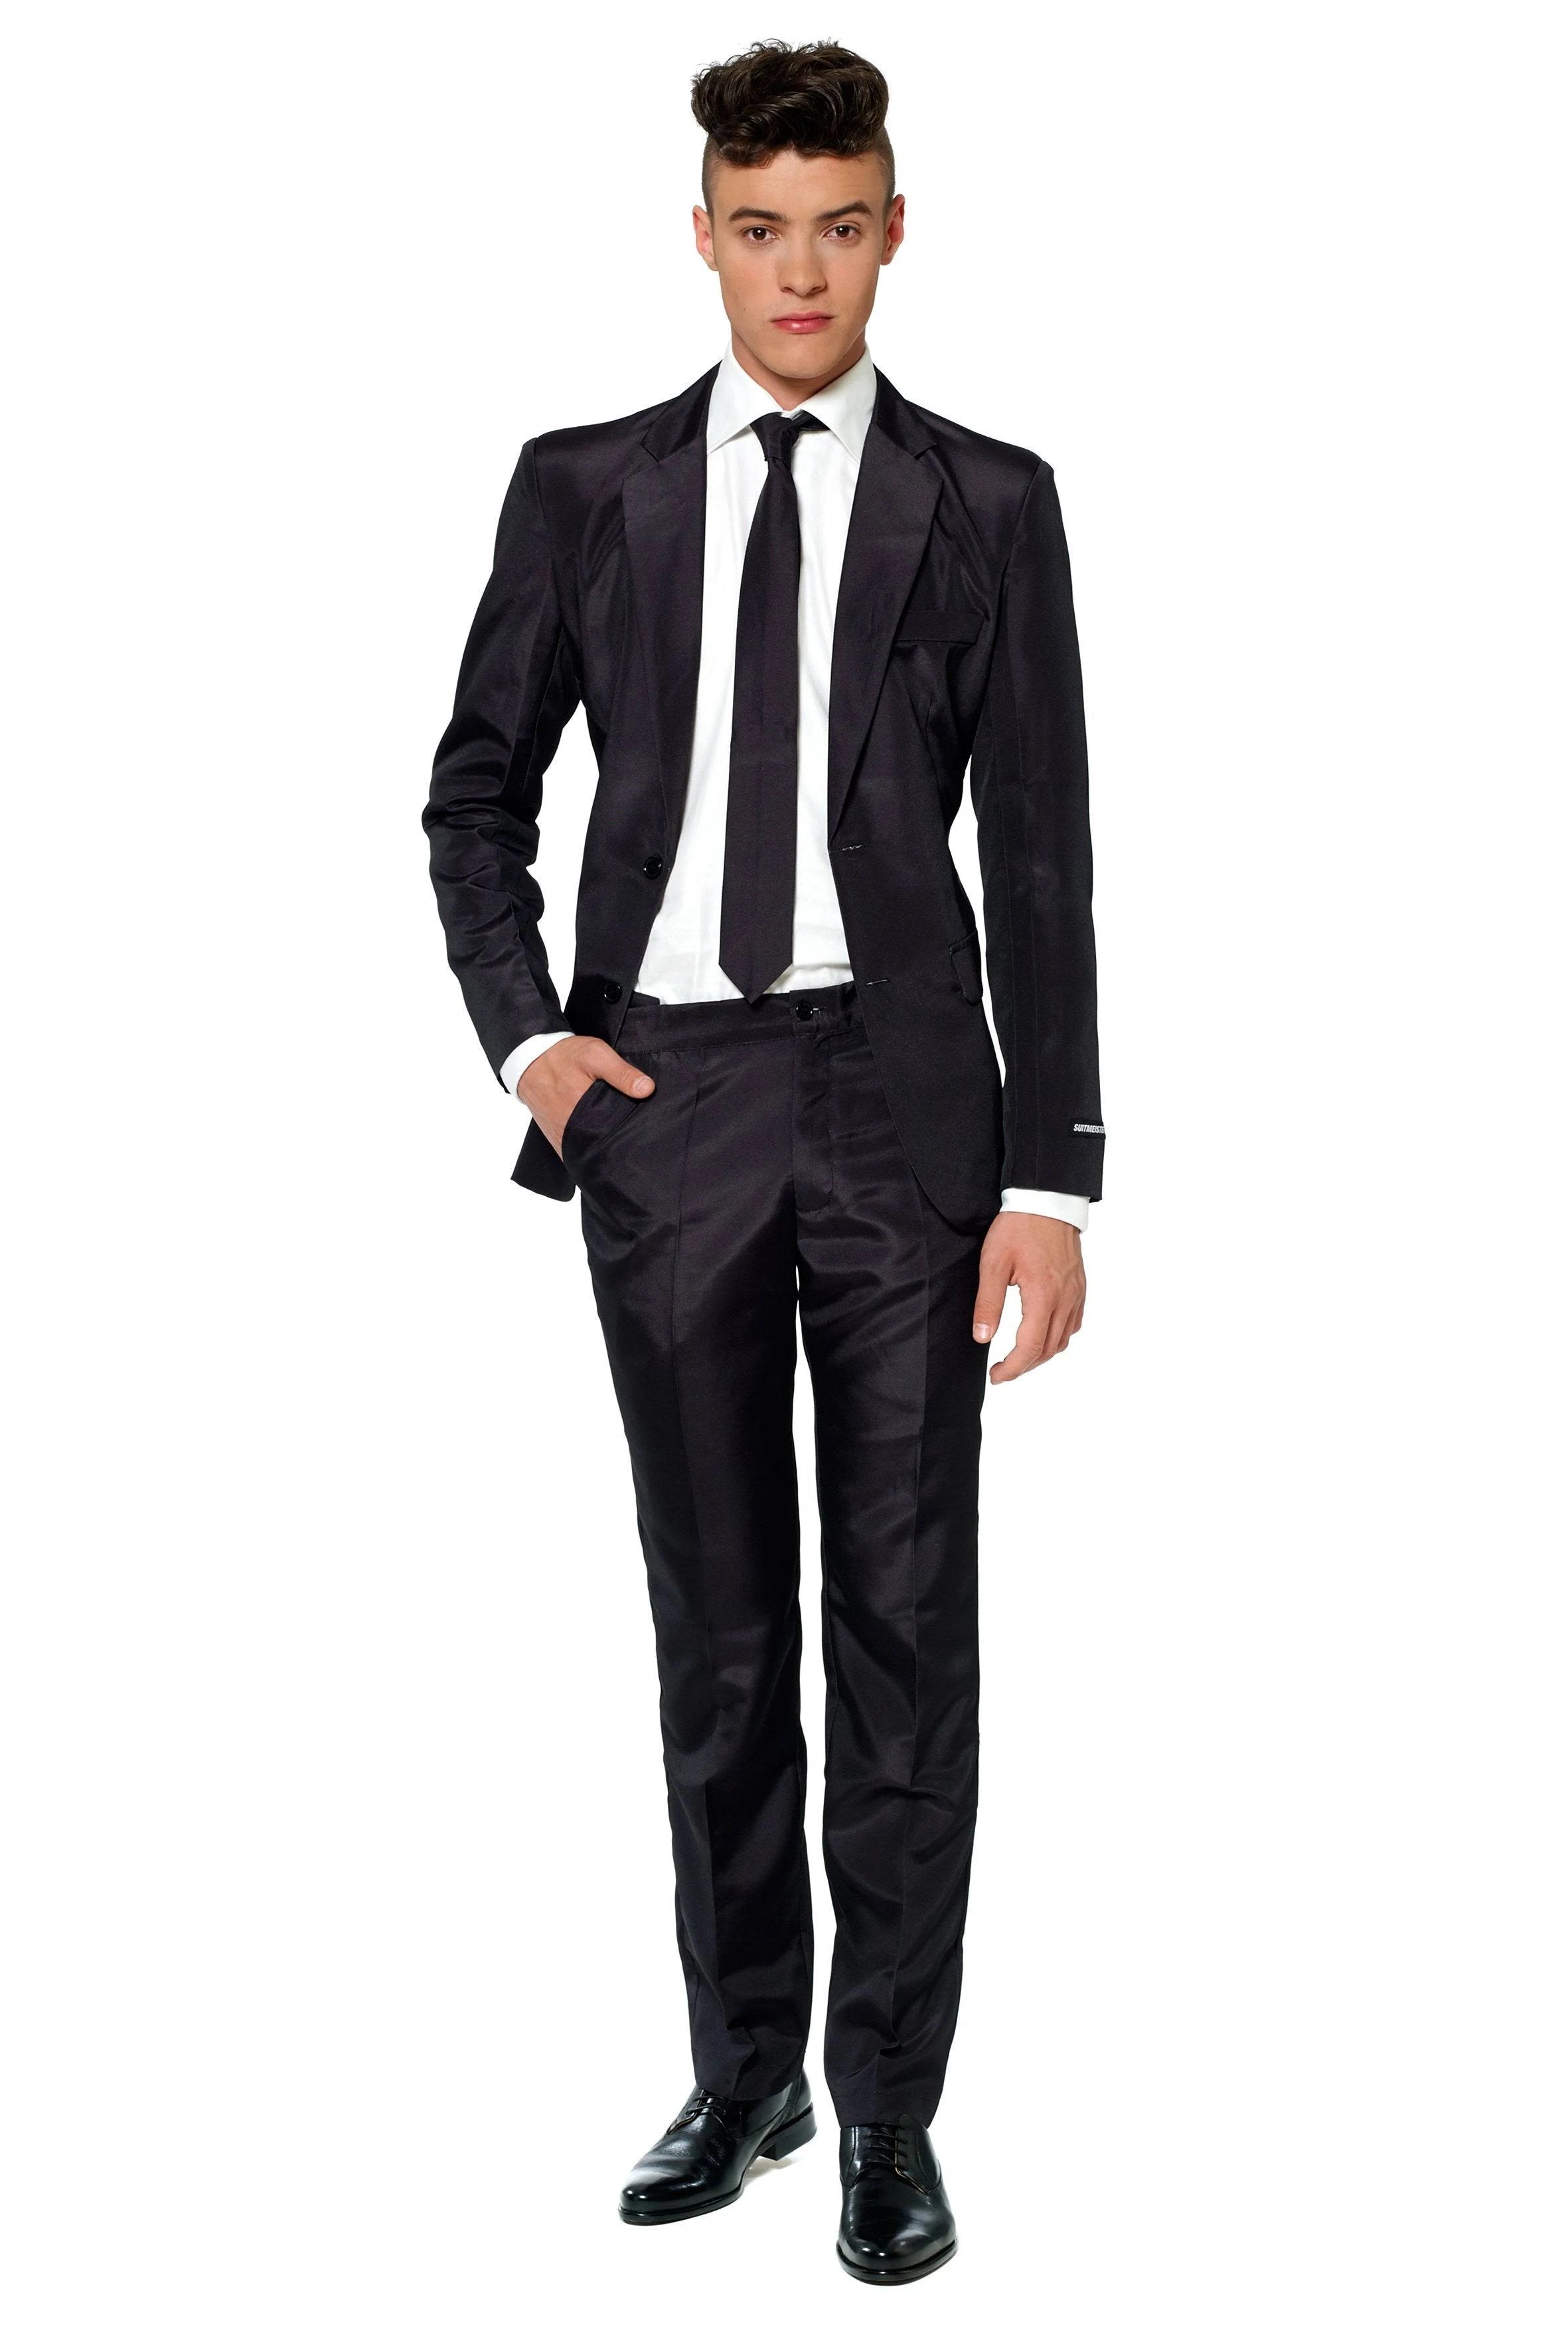 Midnight Black Men's Suit by Suitmeister Solid - Elegant Black Suit for Halloween | Image